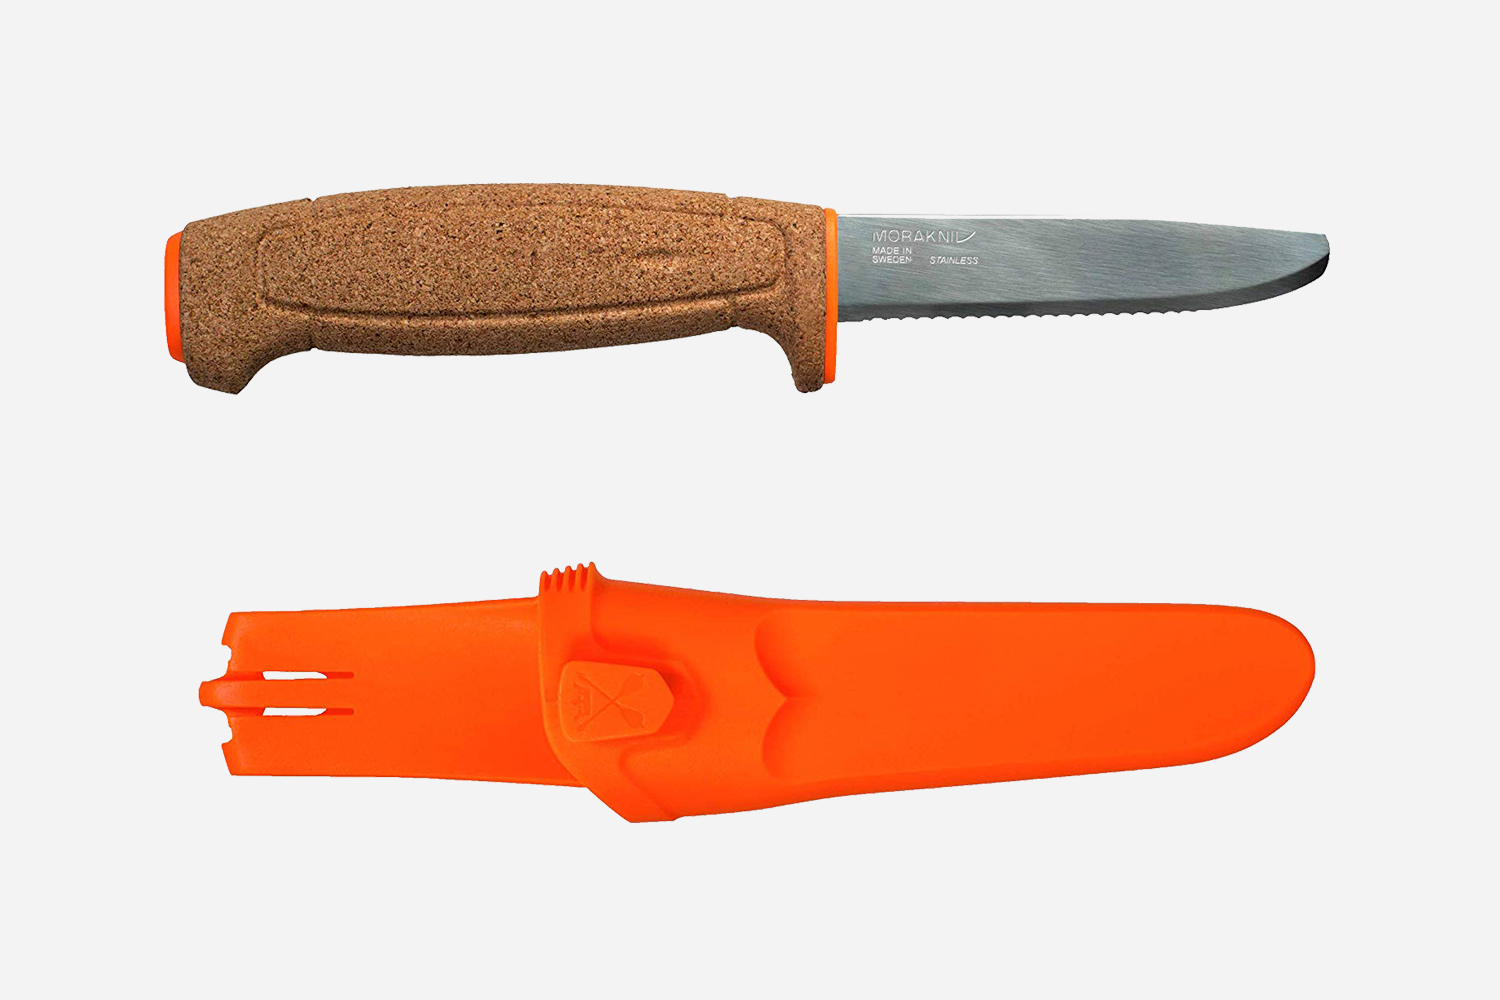 Morakniv Floating Fixed Blade Stainless Steel Serrated Knife on Amazon